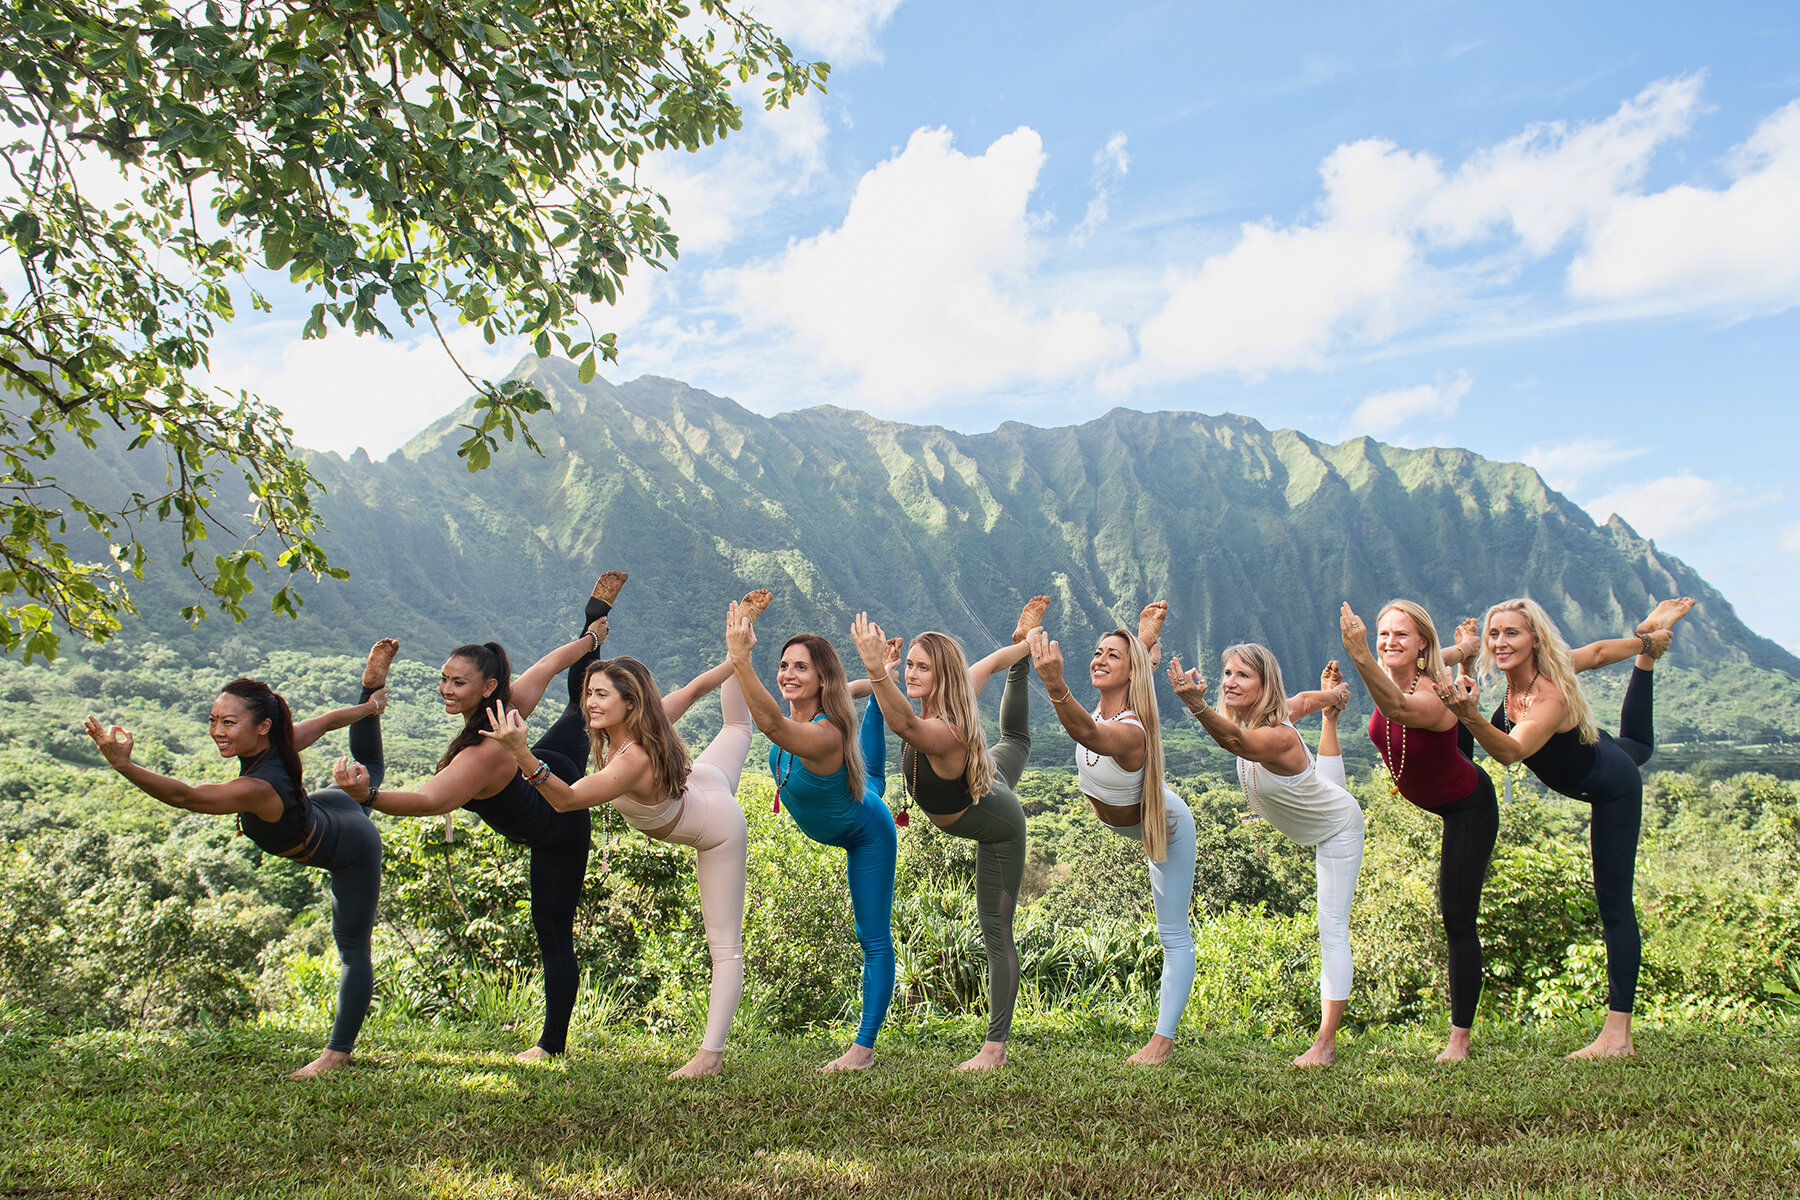 A group photo of some yogini goddesses.